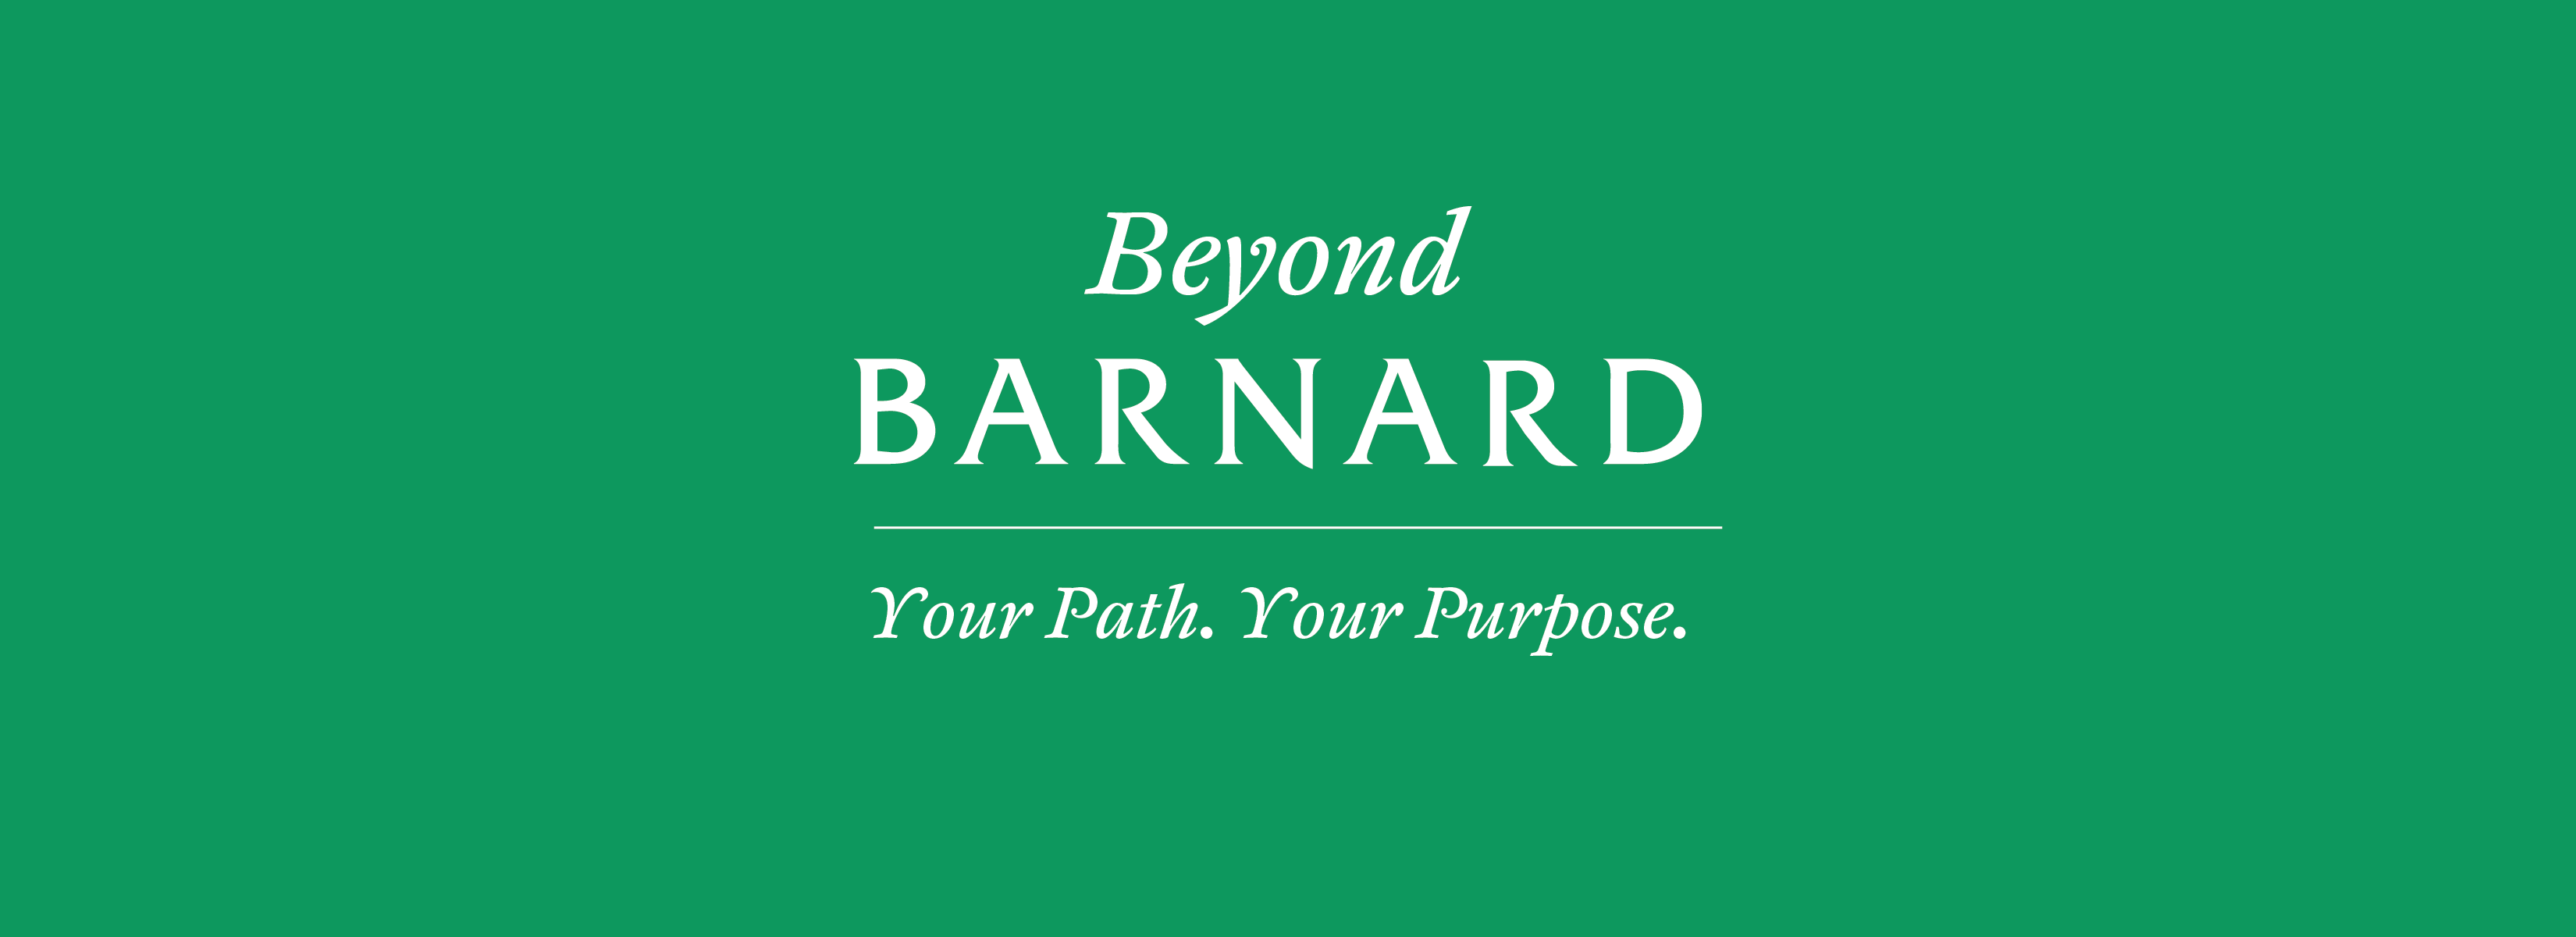 beyond barnard logo